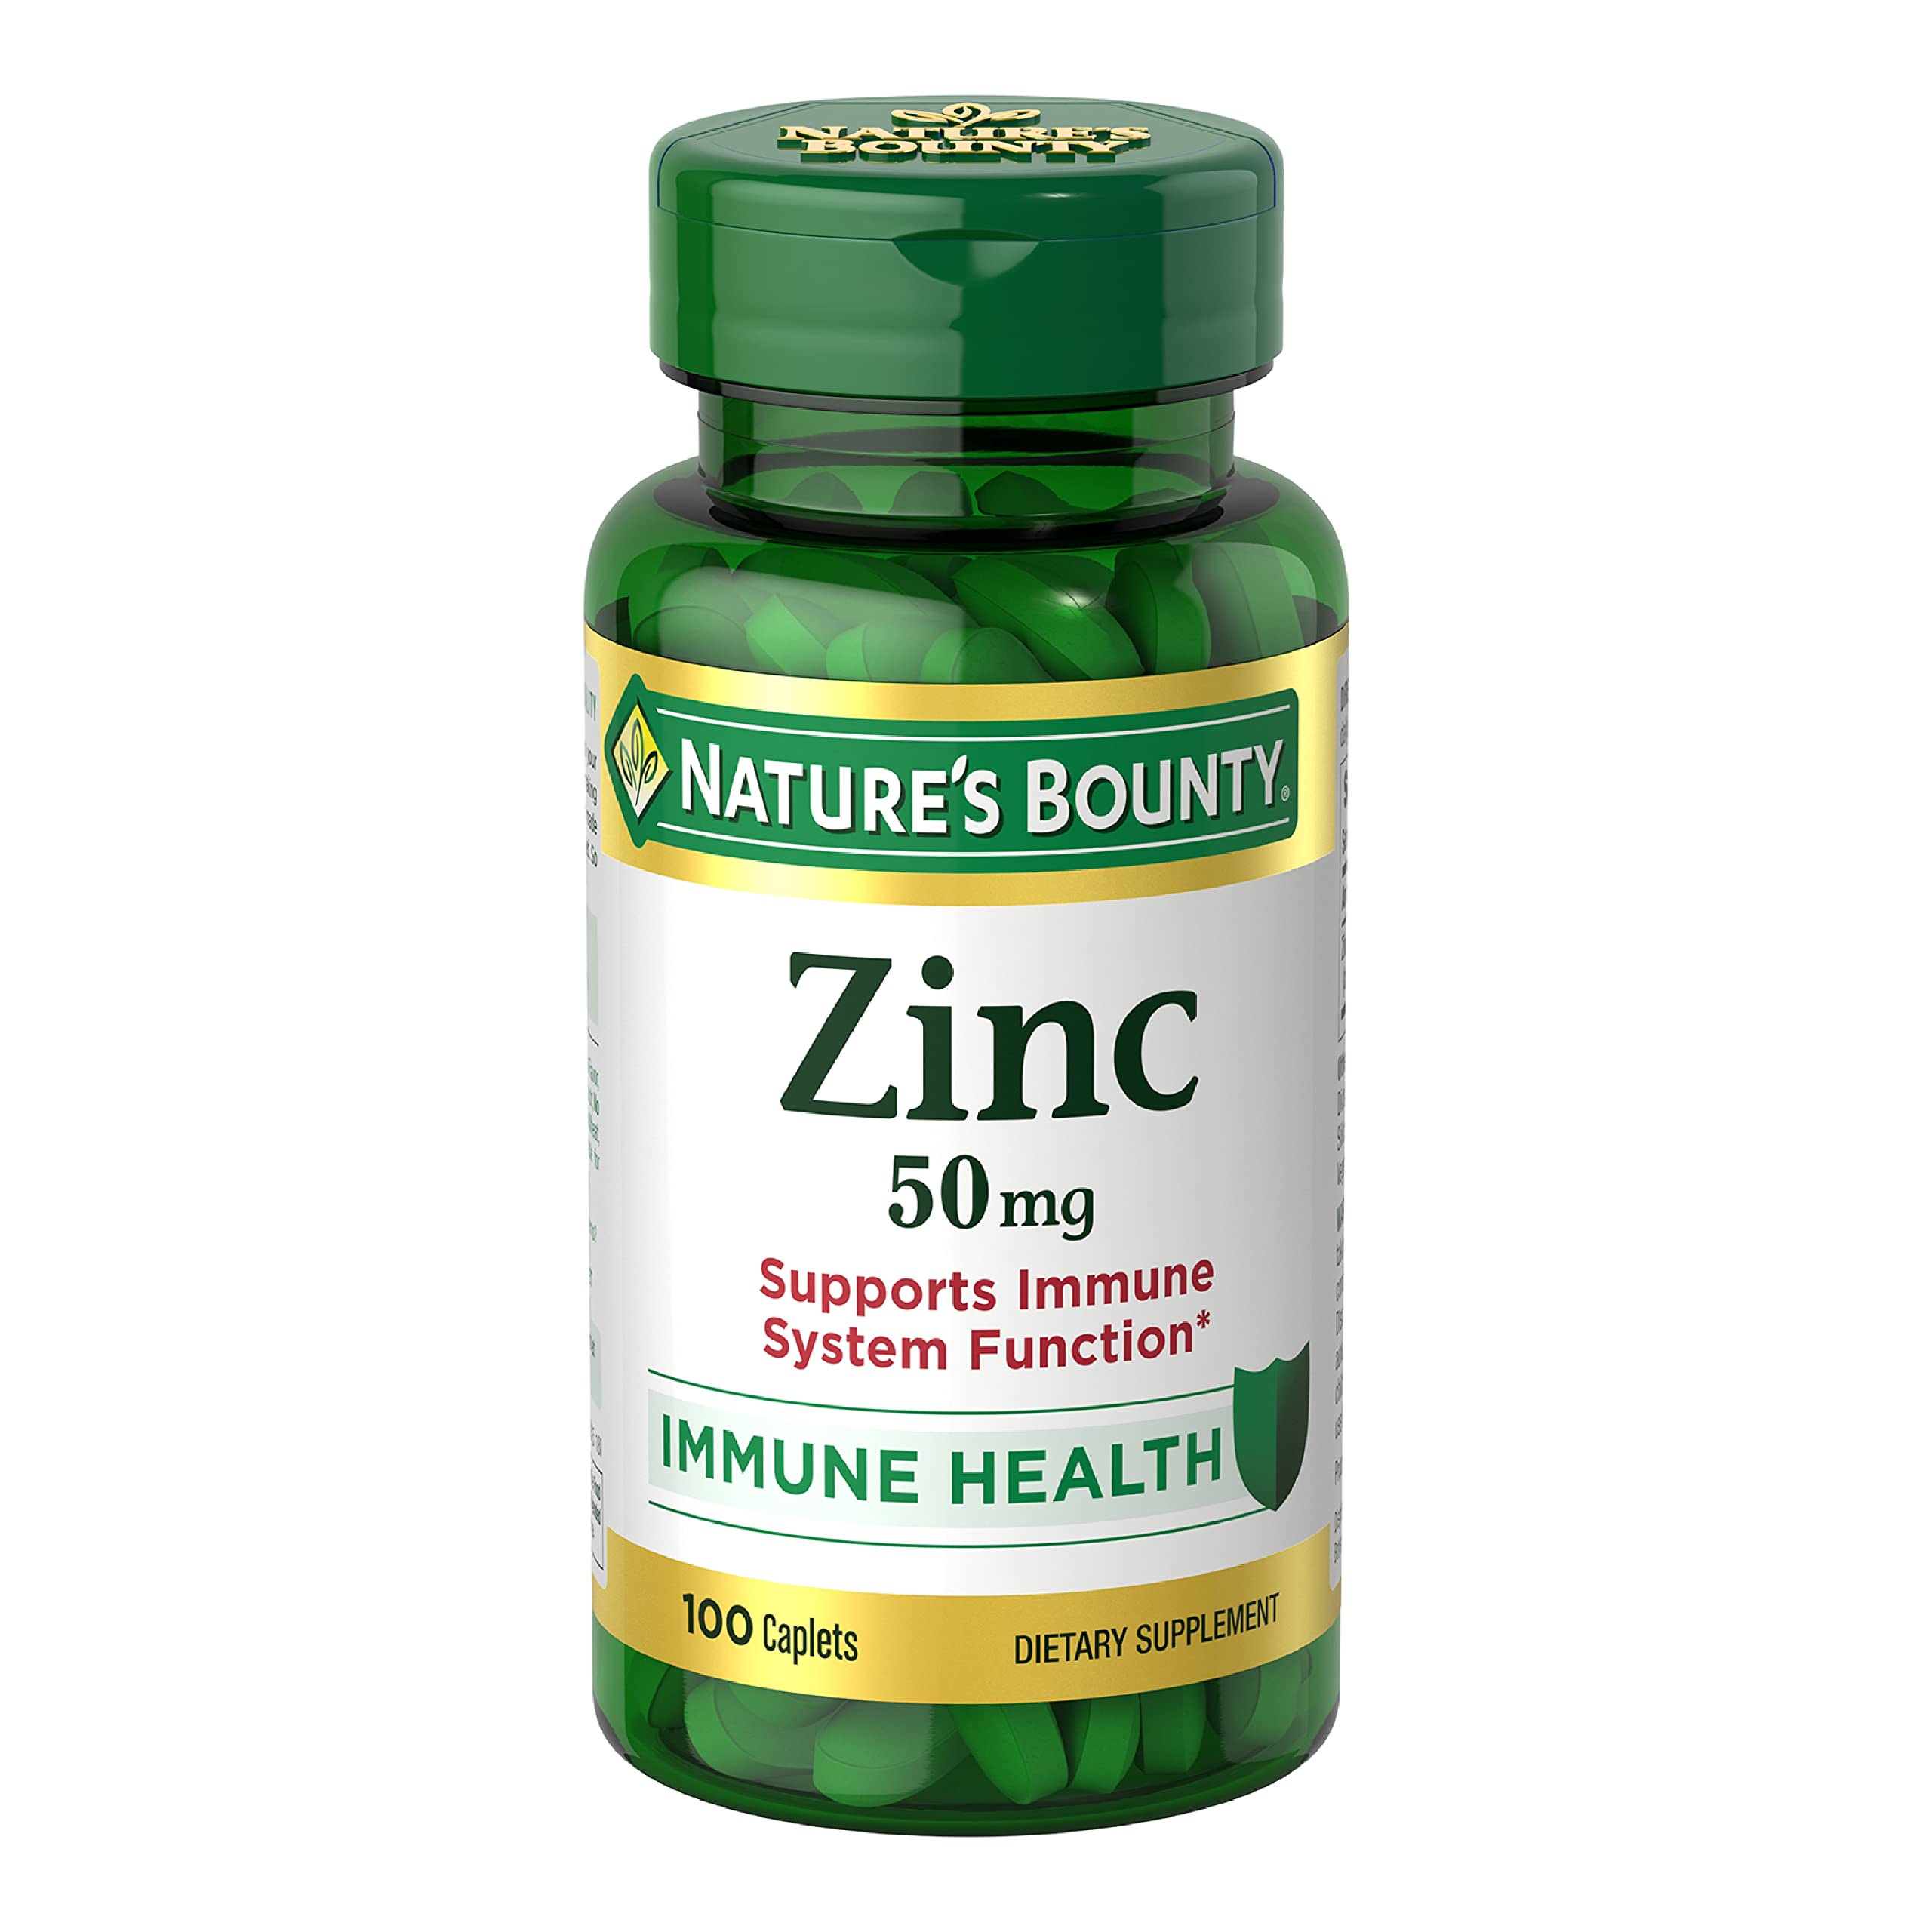 Nature's Bounty Zinc, Immune Support, 50 mg, Caplets, 100 Ct